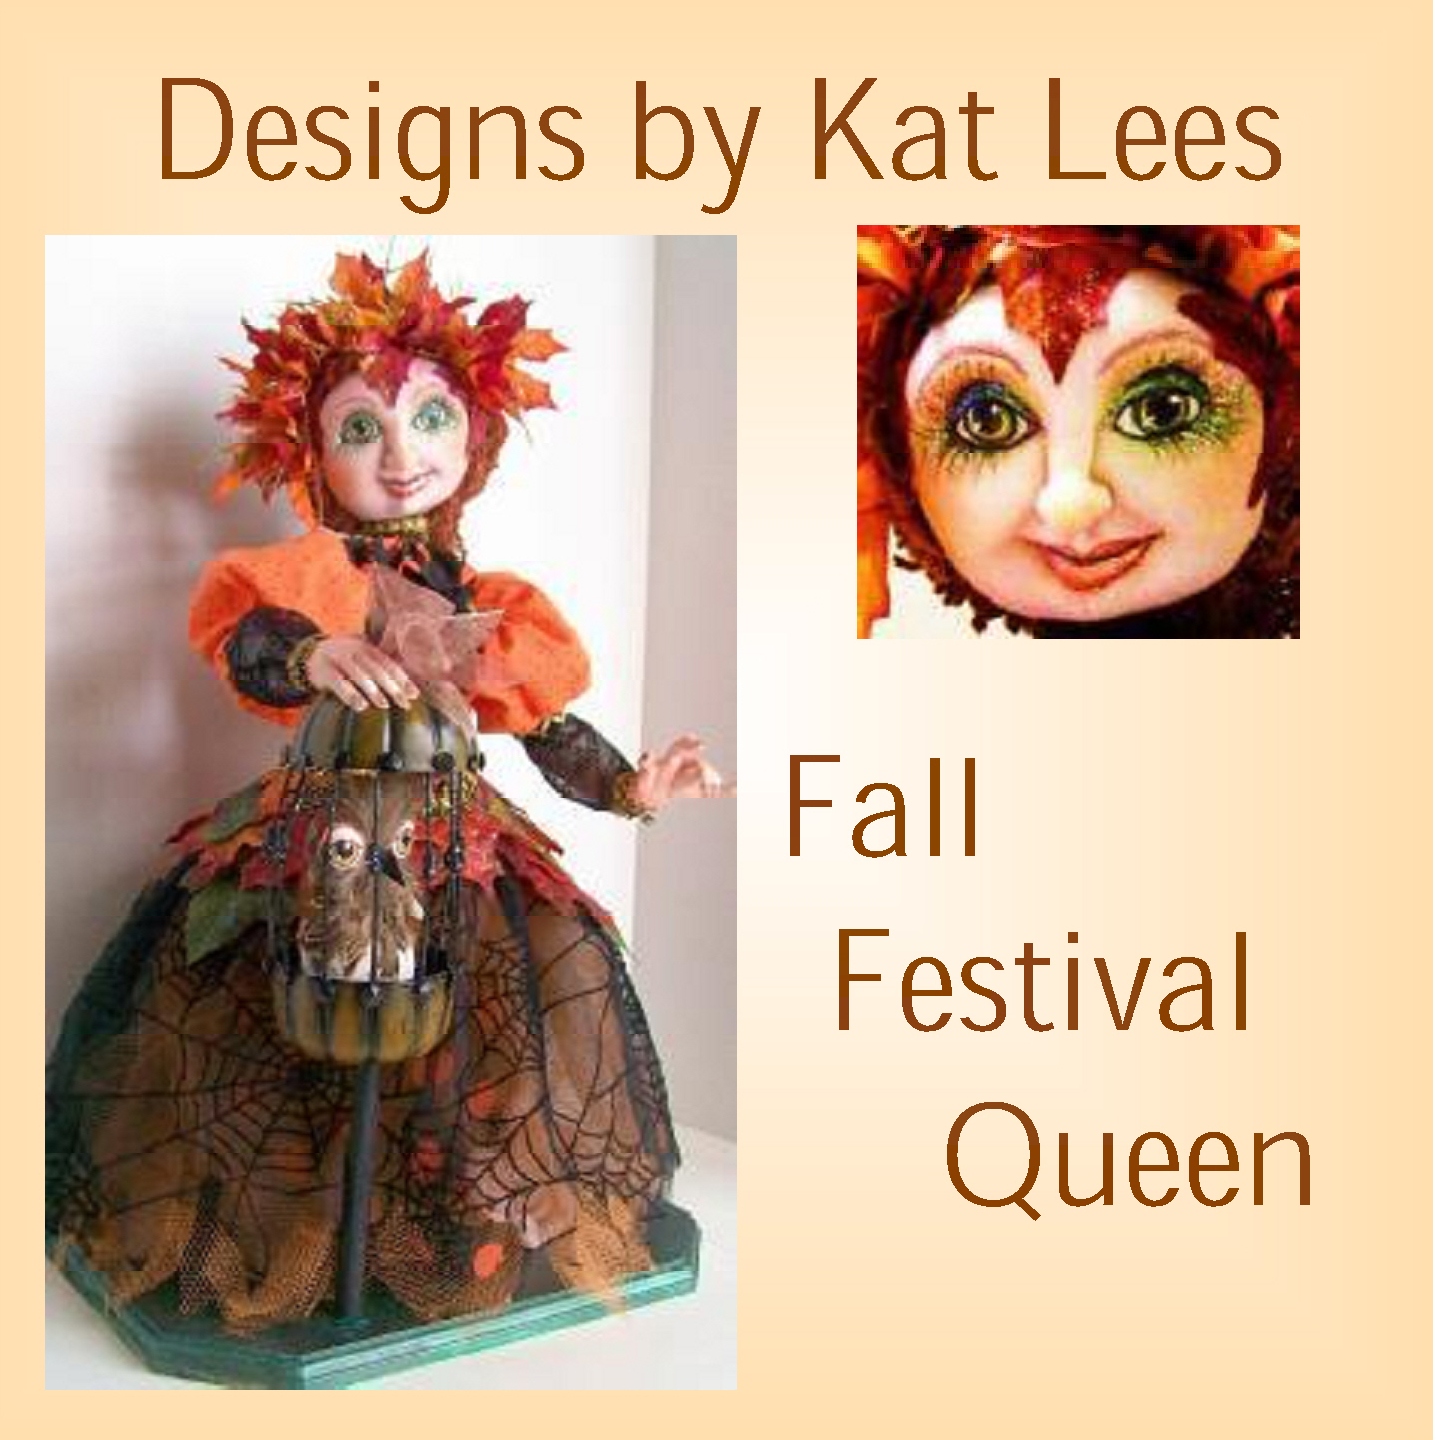 Fall Festival Queen